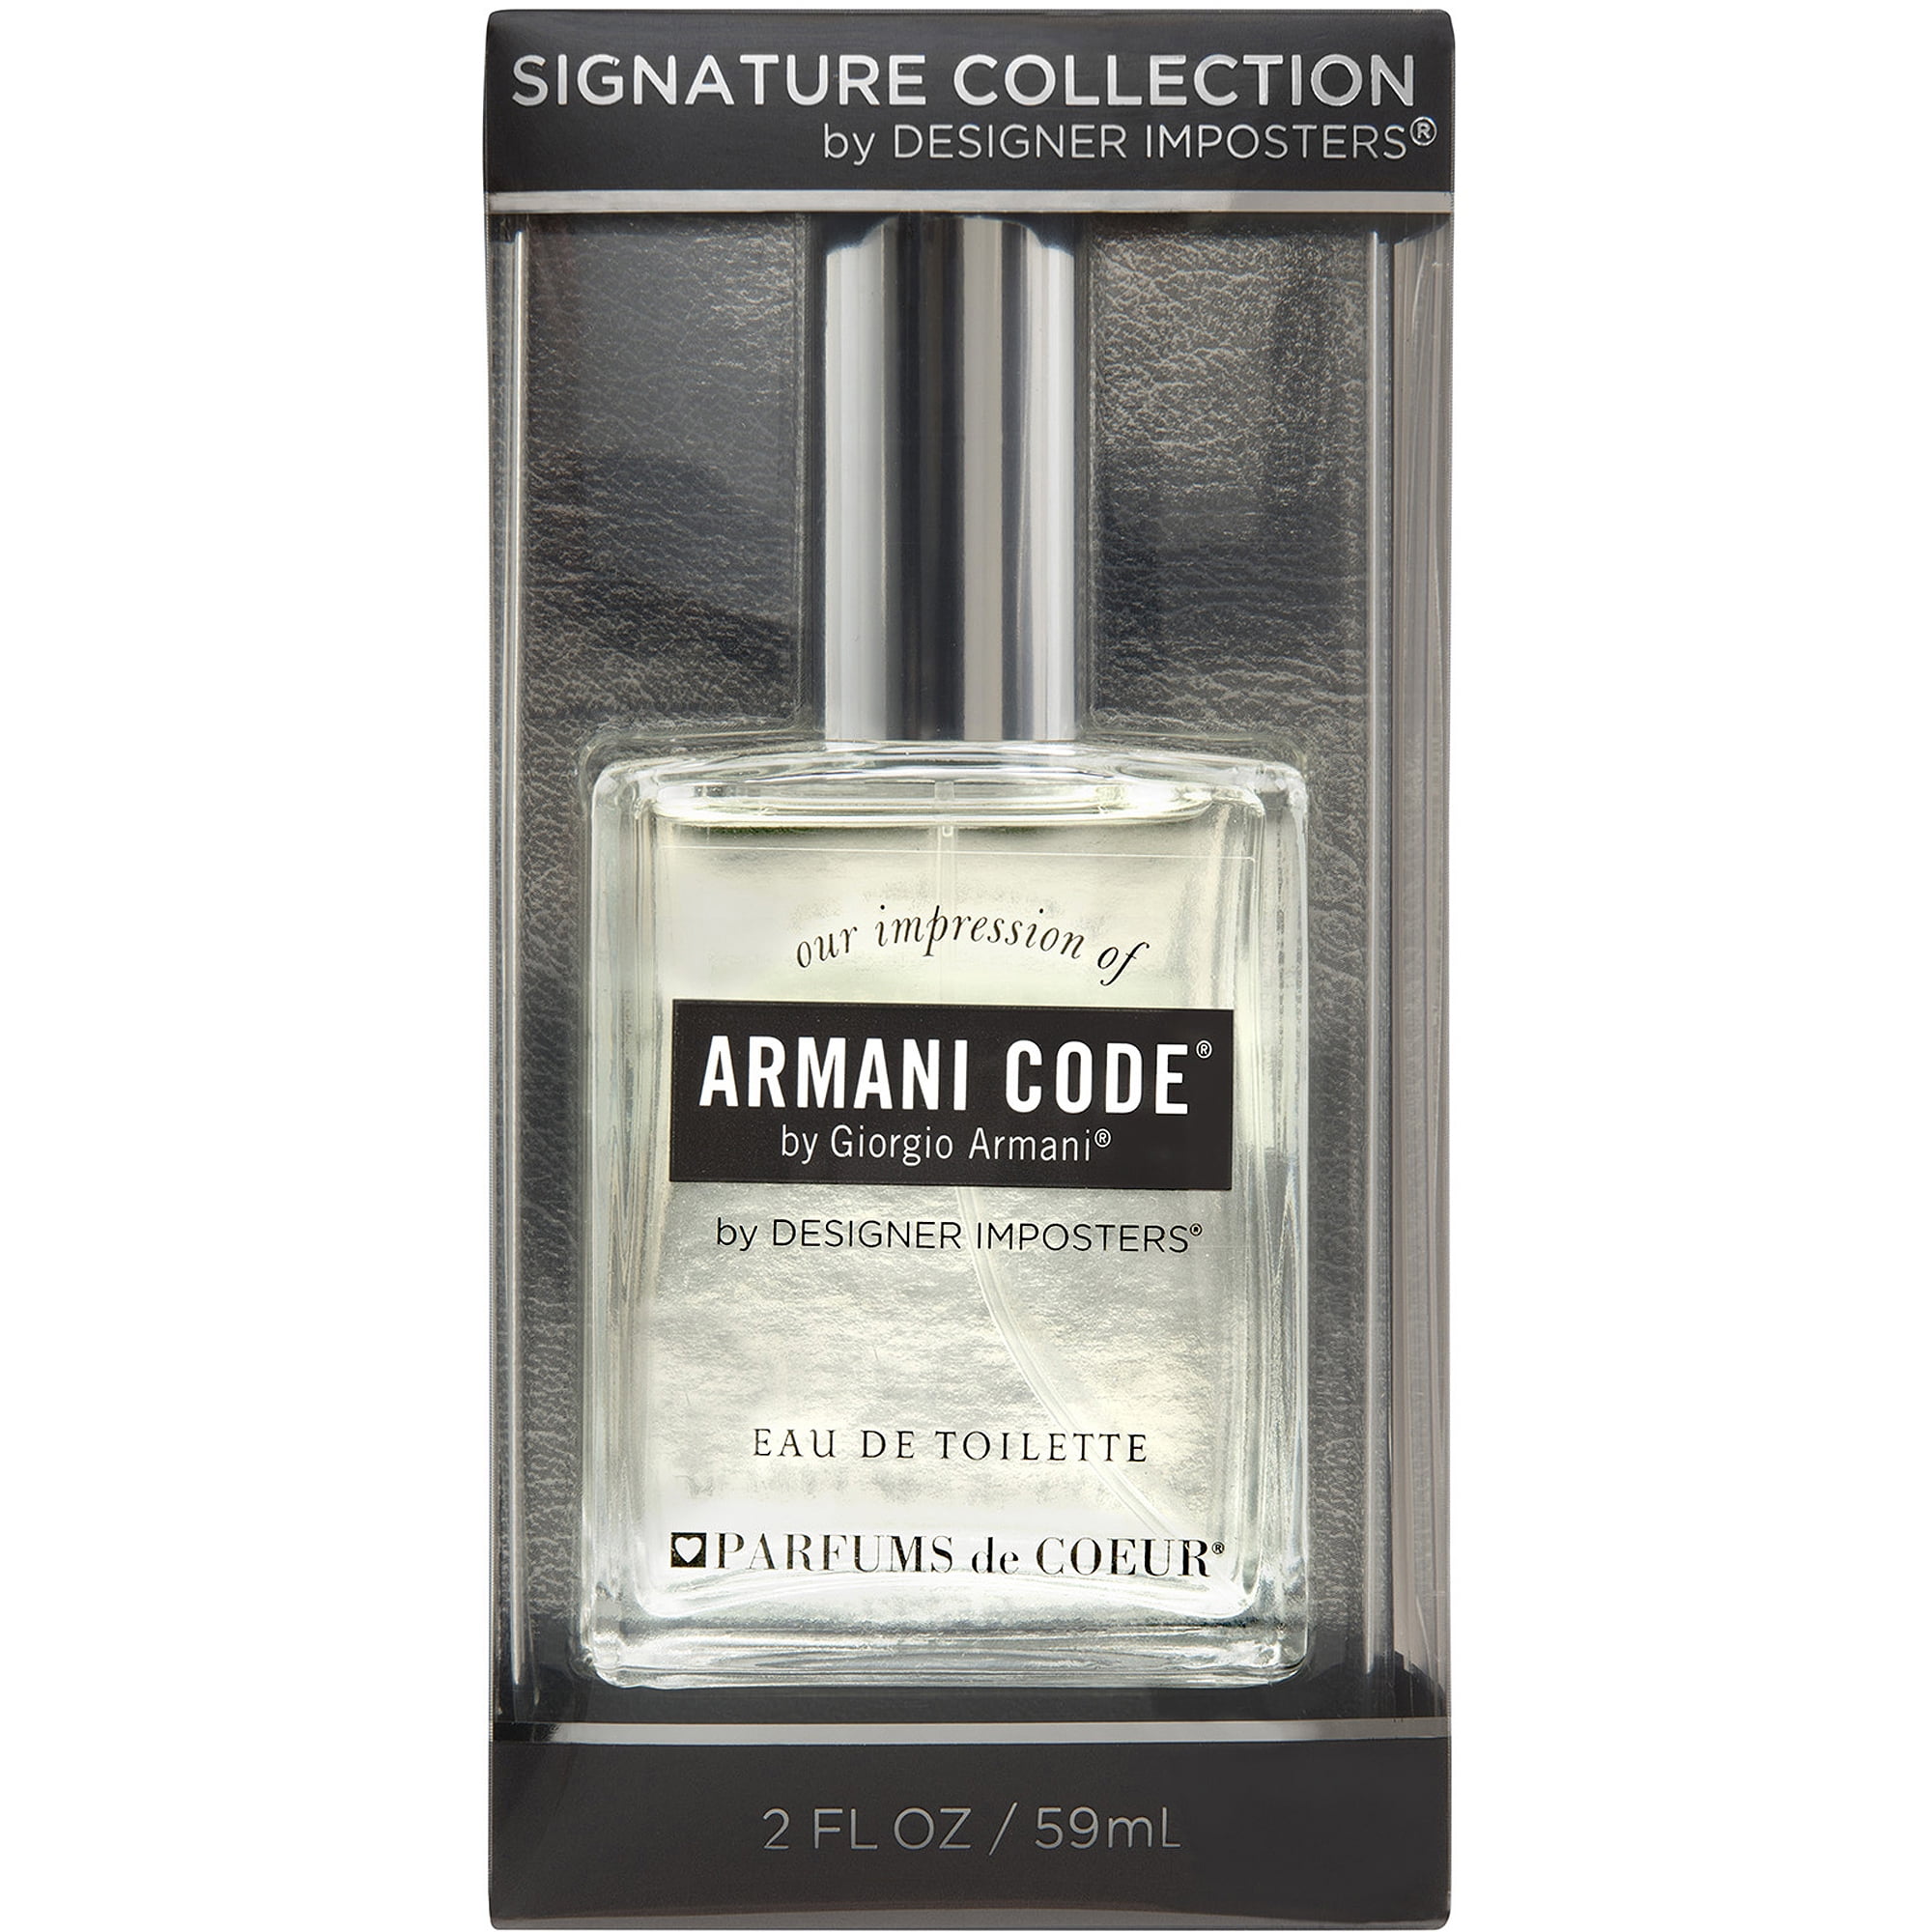 perfume that smells like armani code